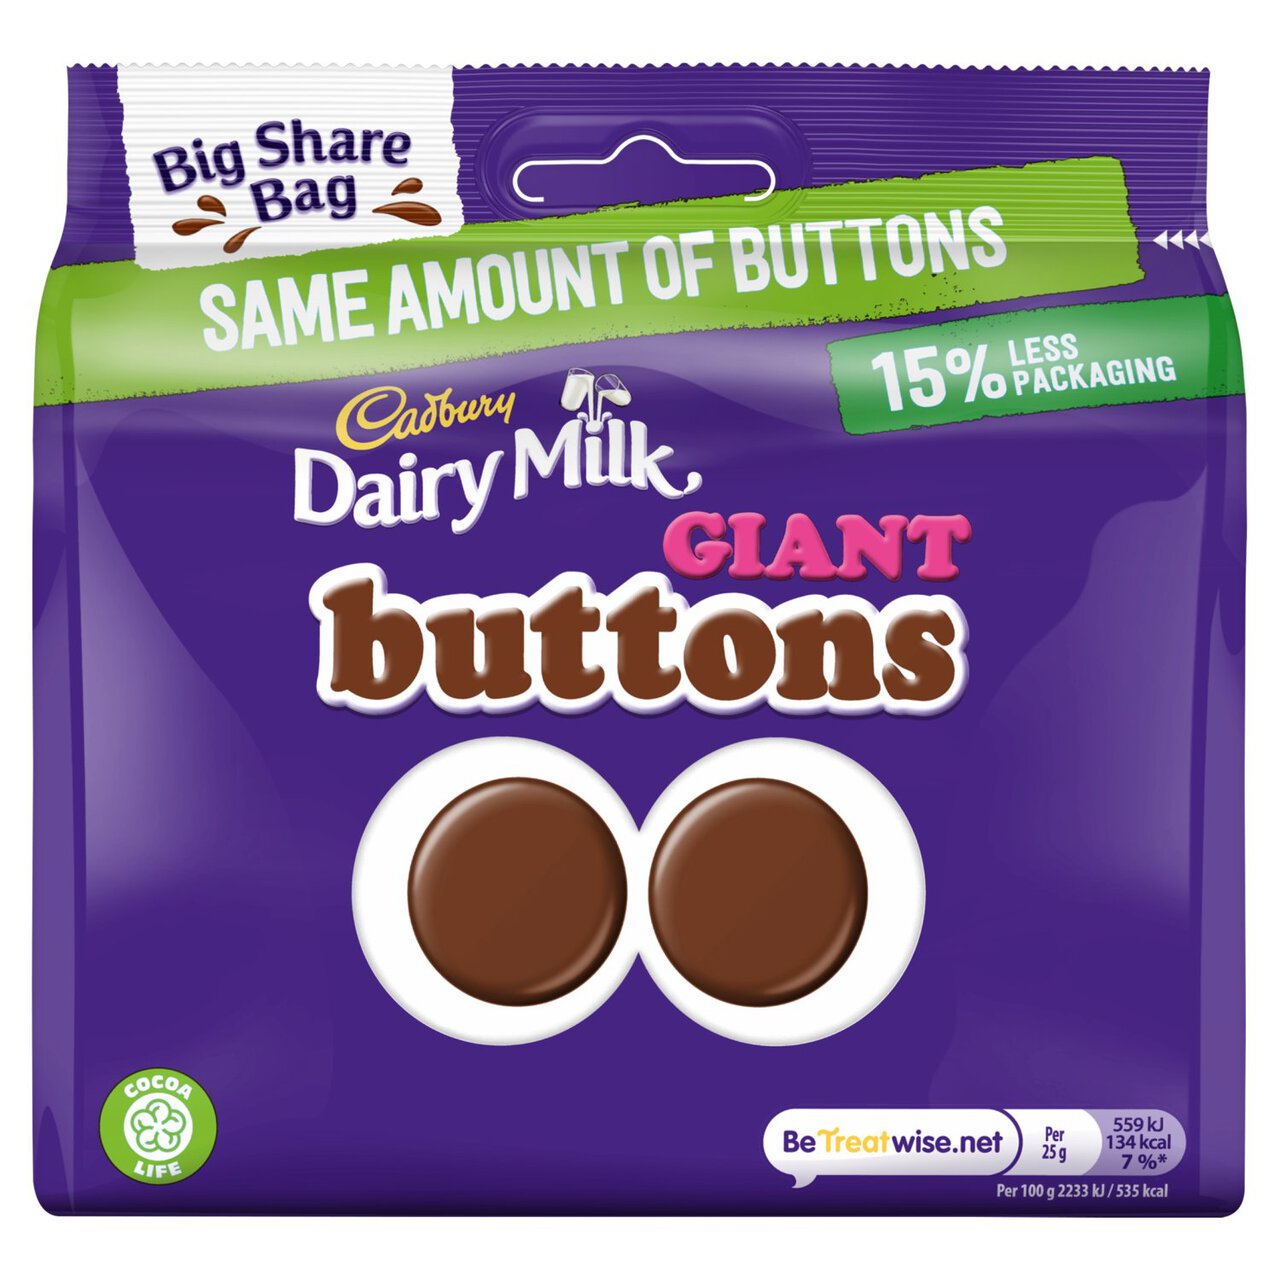 Cadbury Dairy Milk Giant Buttons Chocolate Big Share Bag 240g